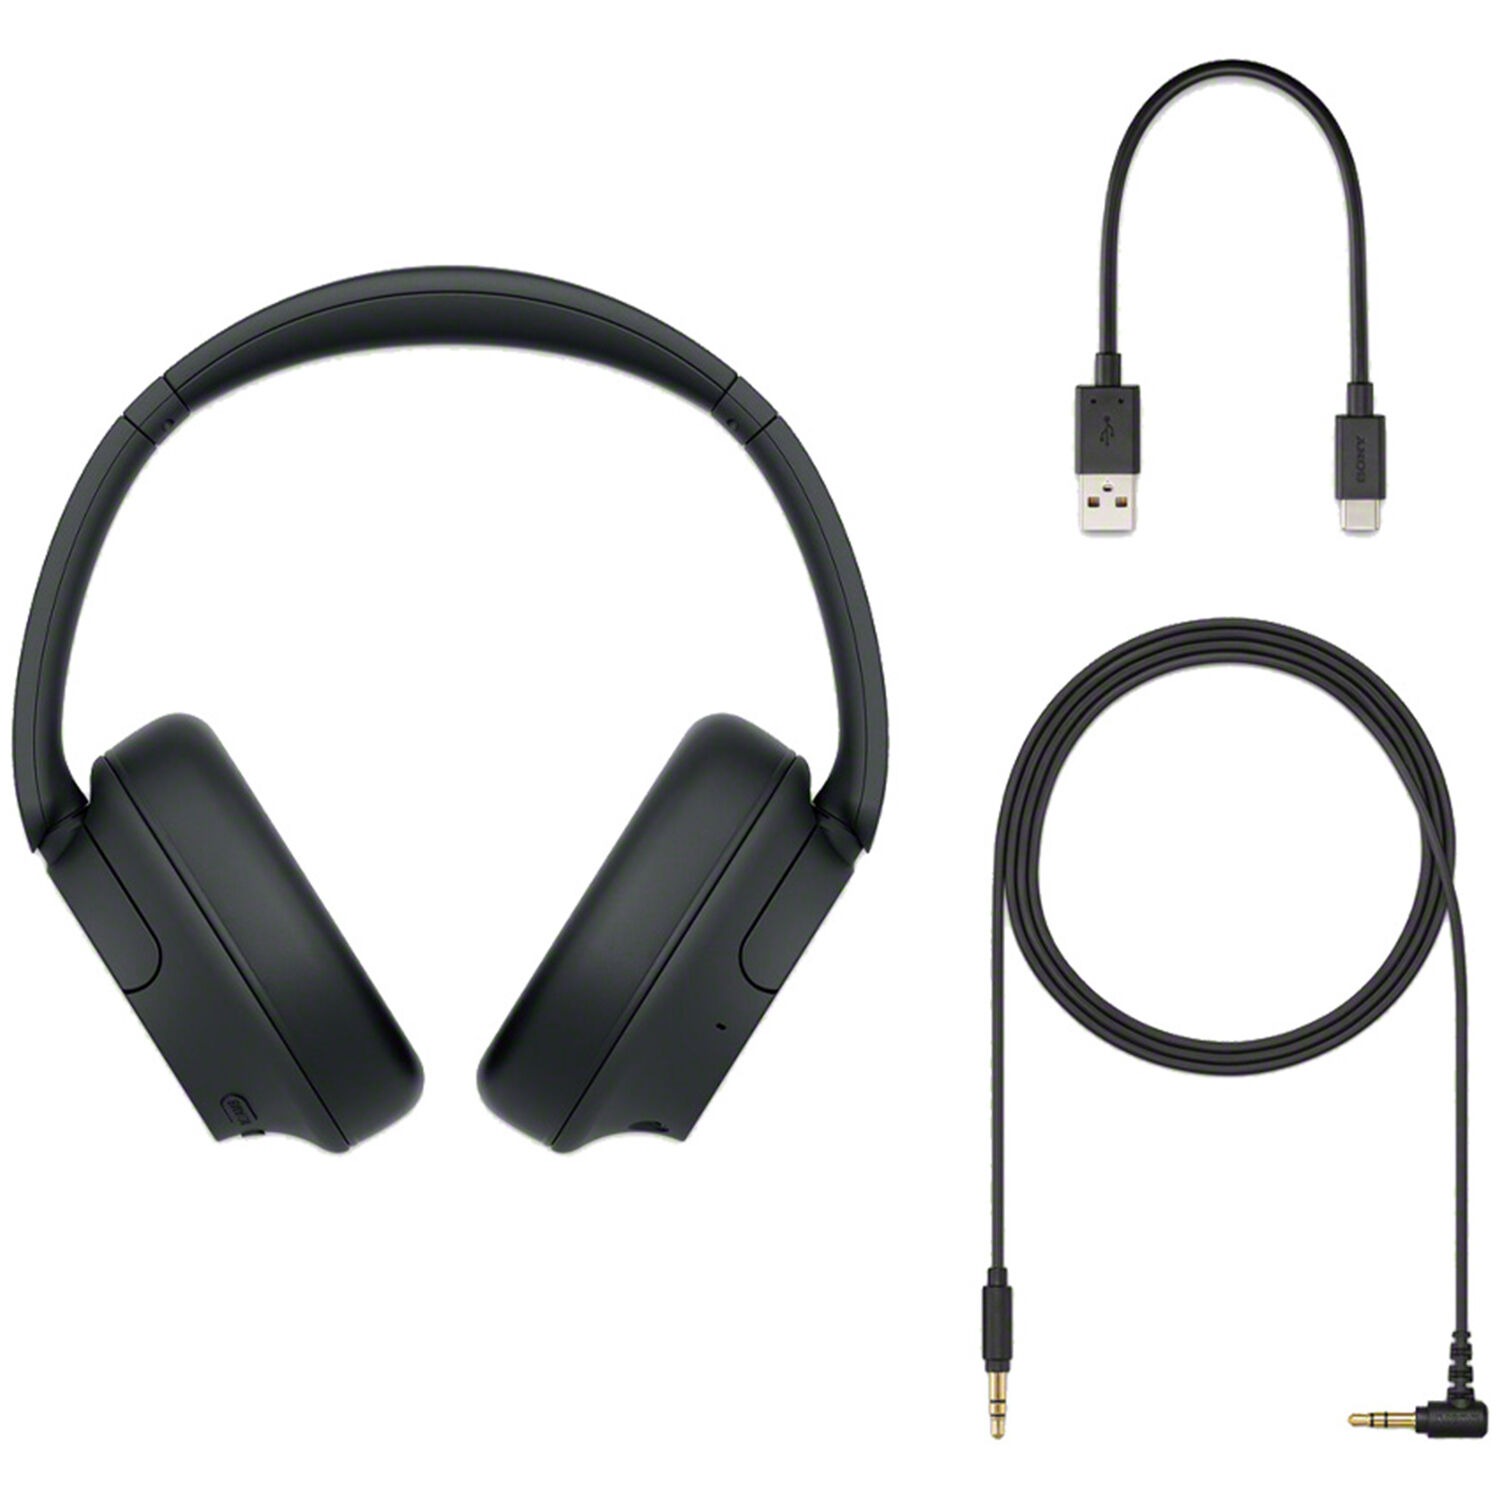 Sony WHCH720N Wireless Noise Canceling Headphones - Black | P.C.